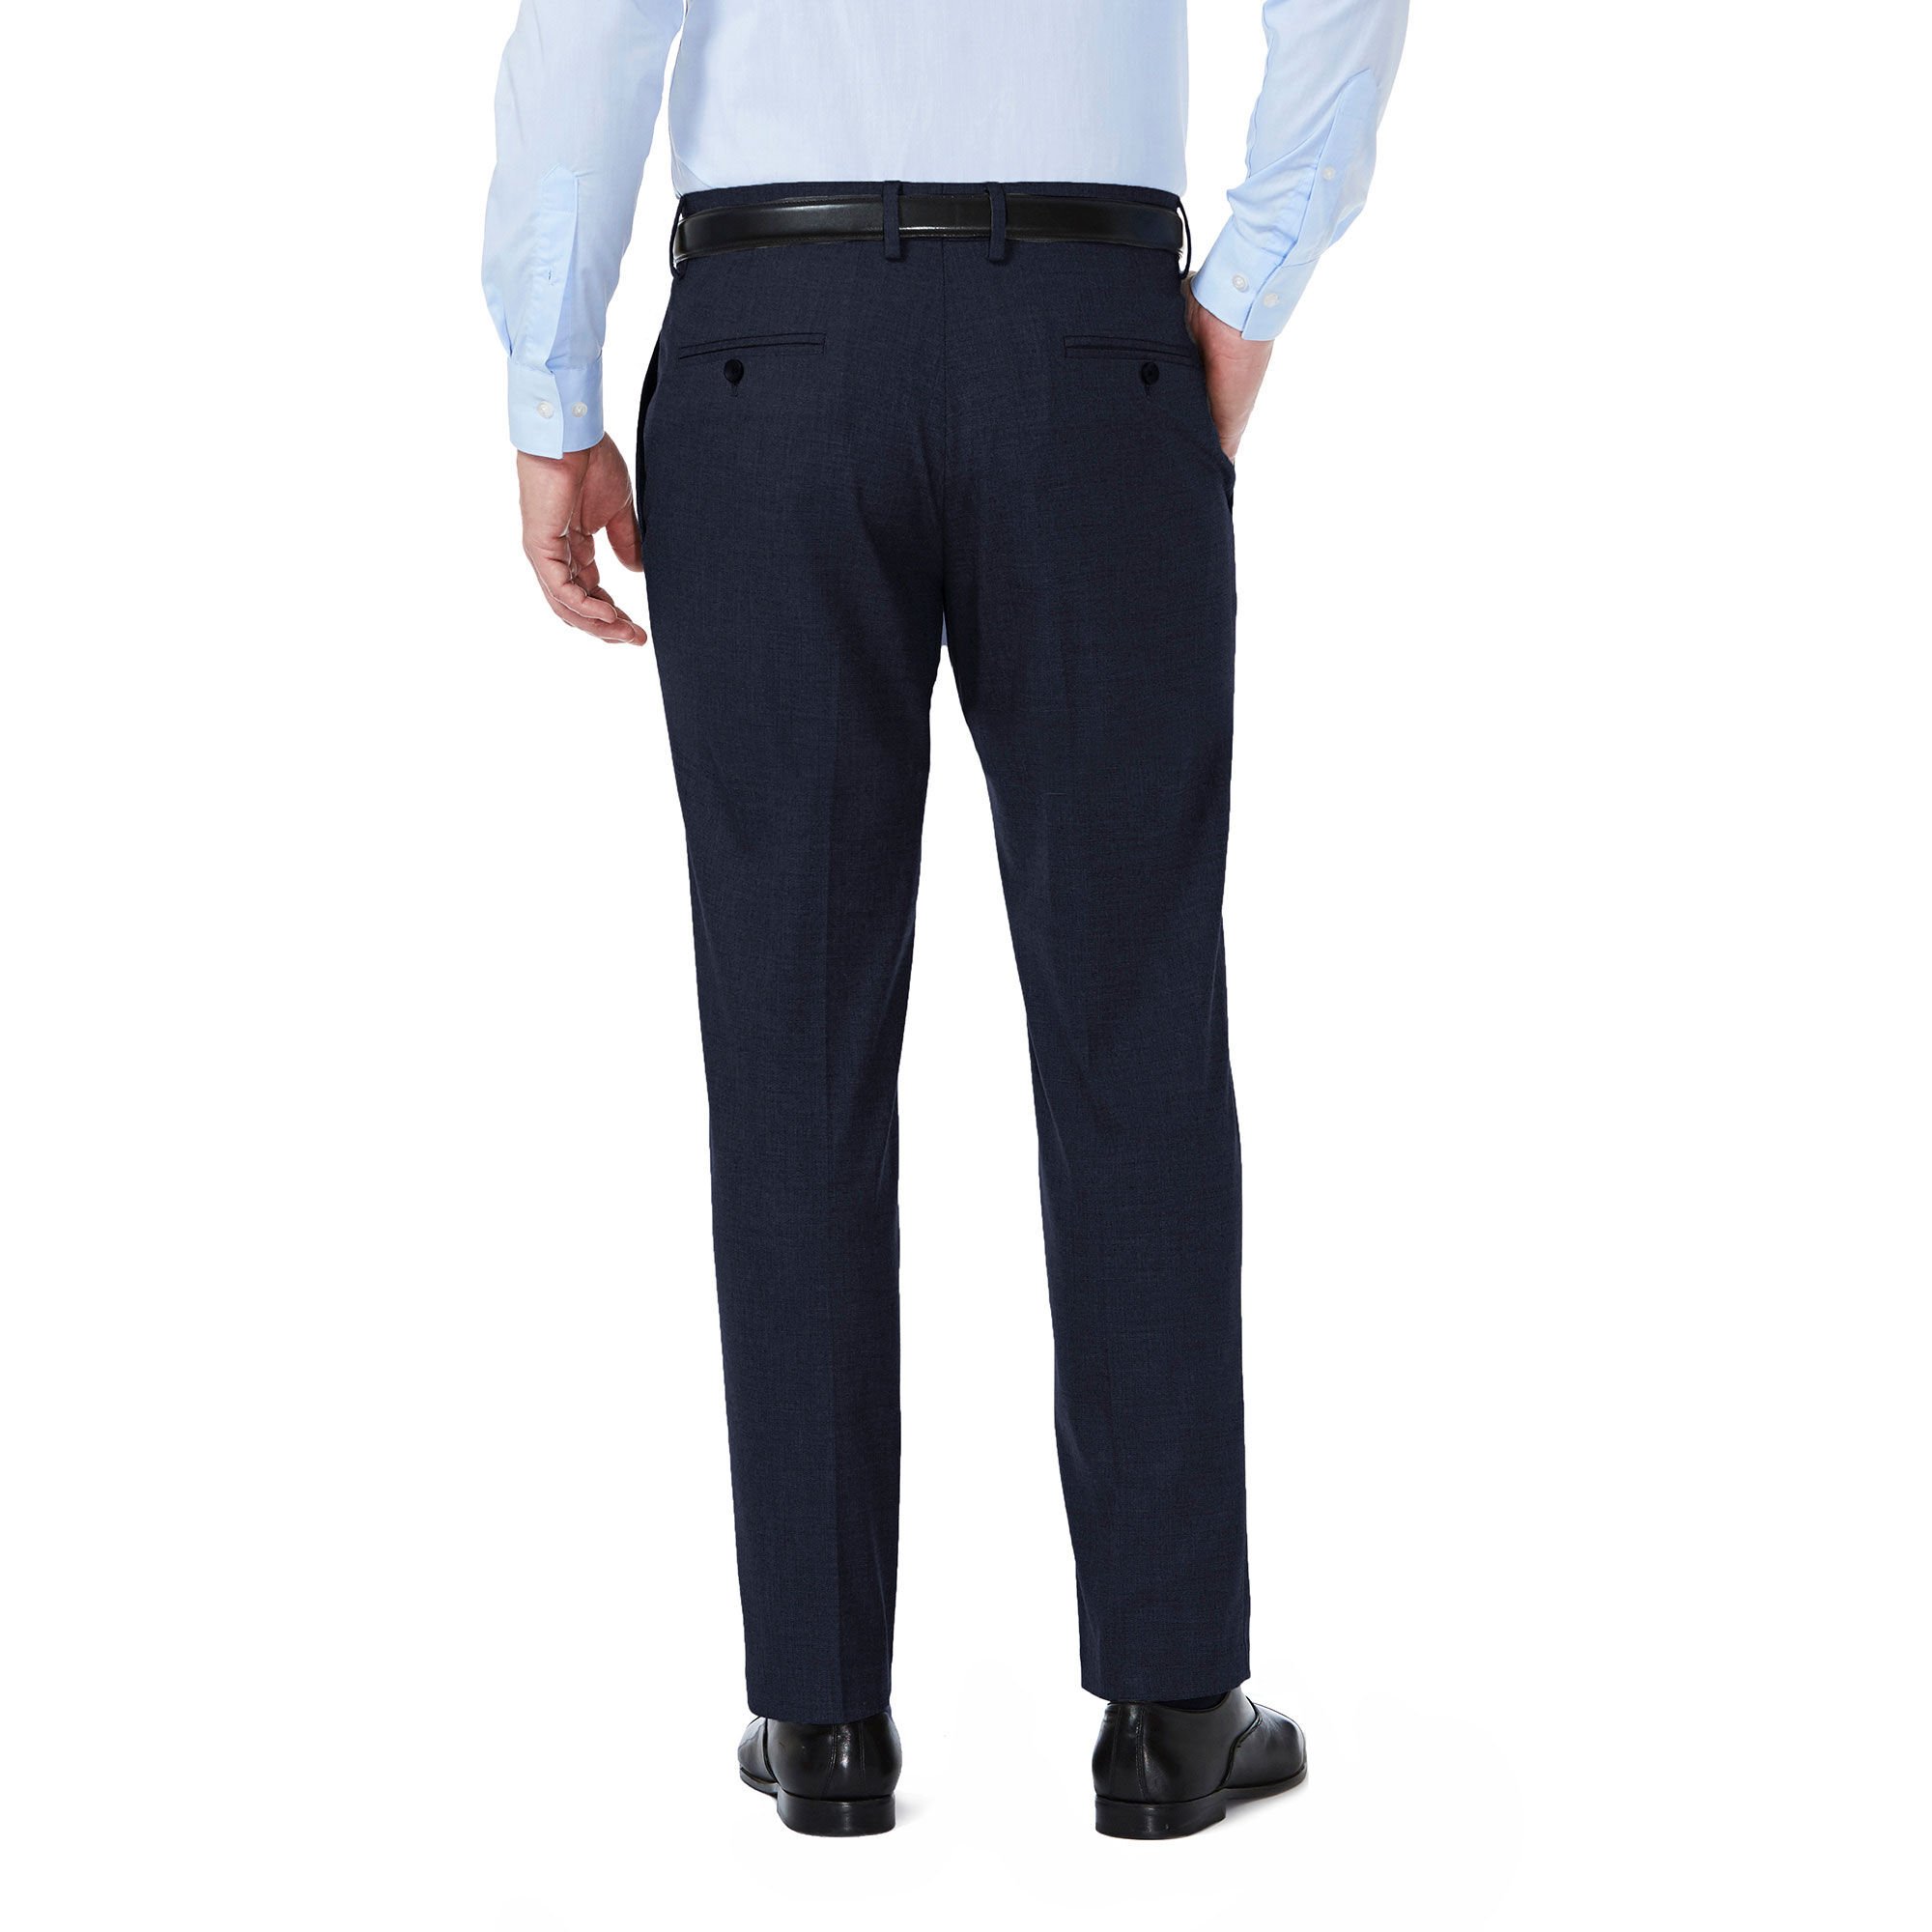 J.M Haggar Men's Sharkskin Premium Classic-Fit Stretch Suit Separate Pant 